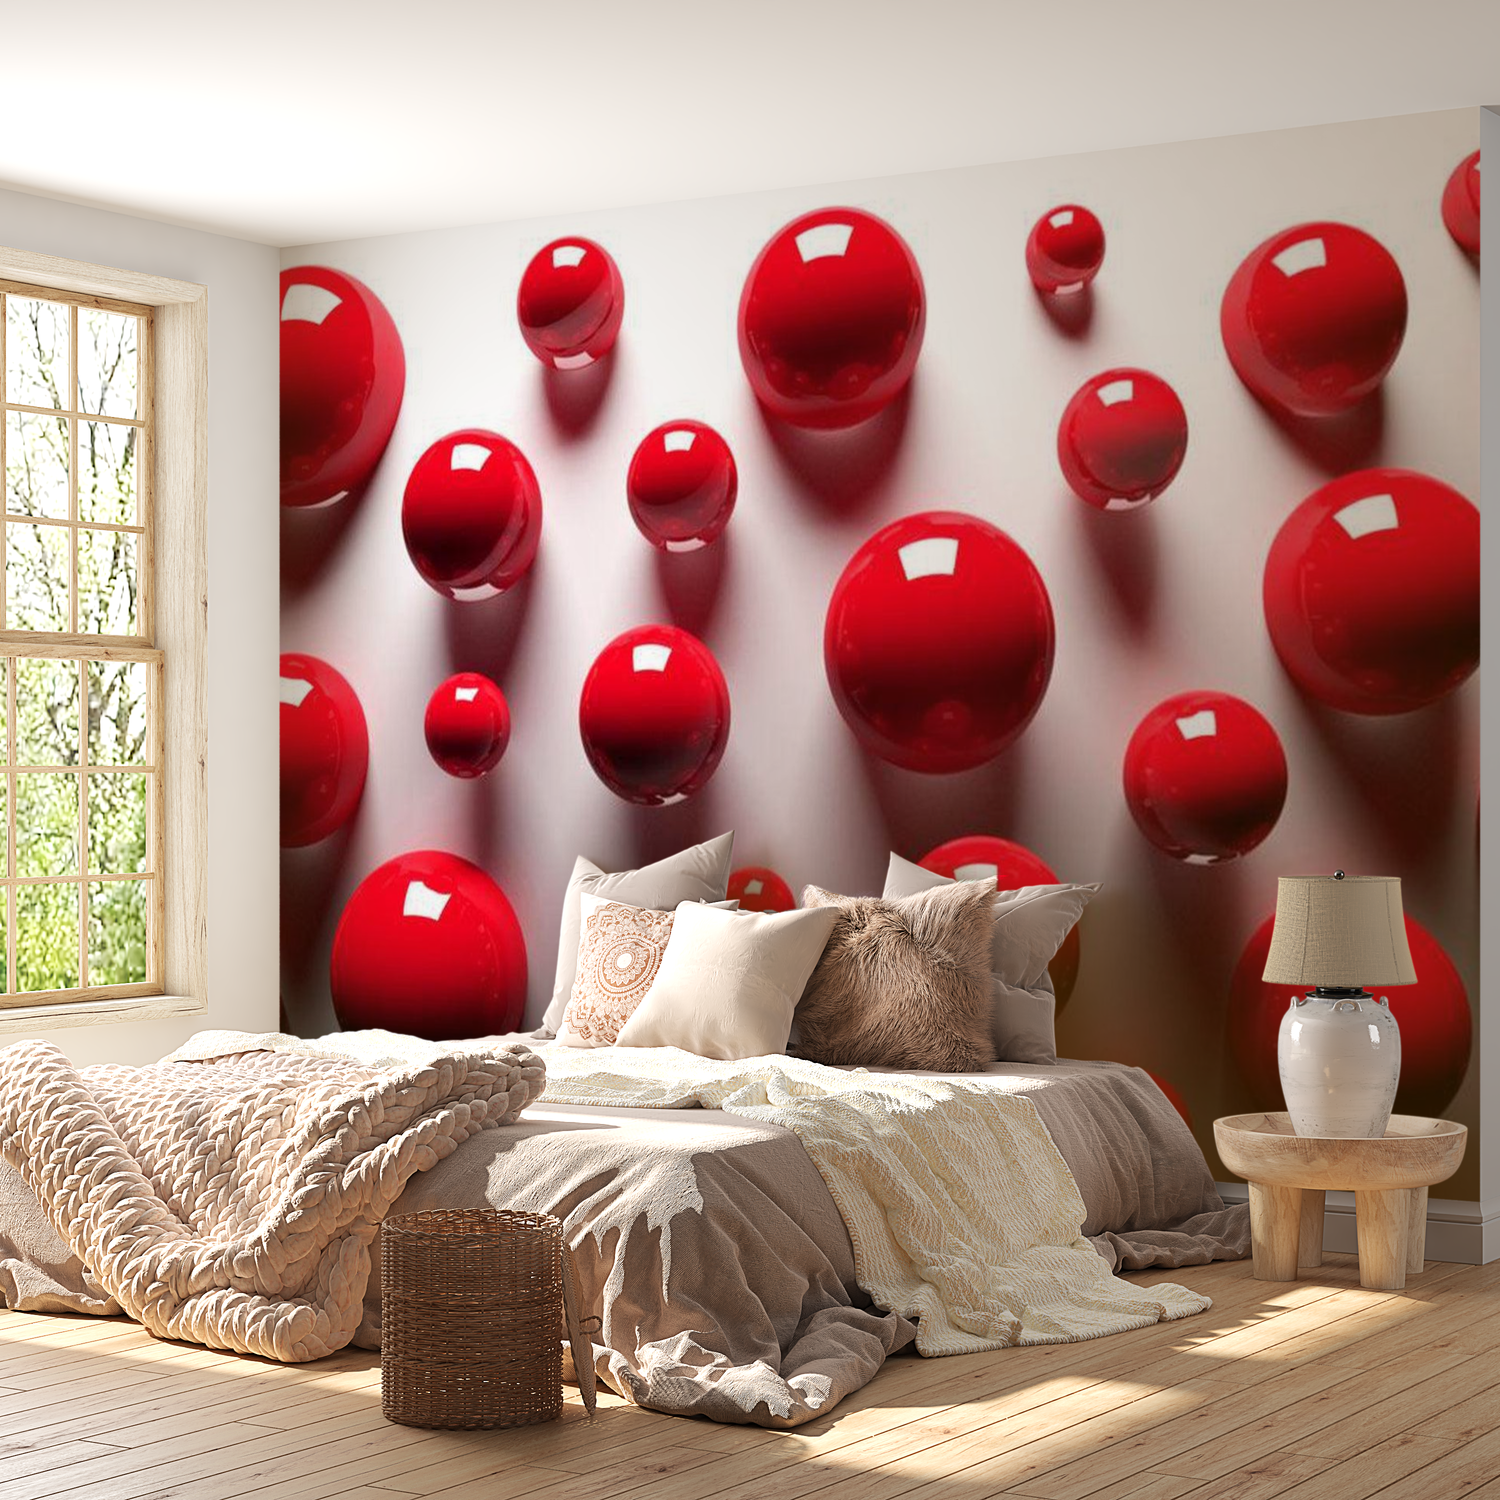 3D Illusion Wallpaper Wall Mural - Red Balls 39"Wx27"H